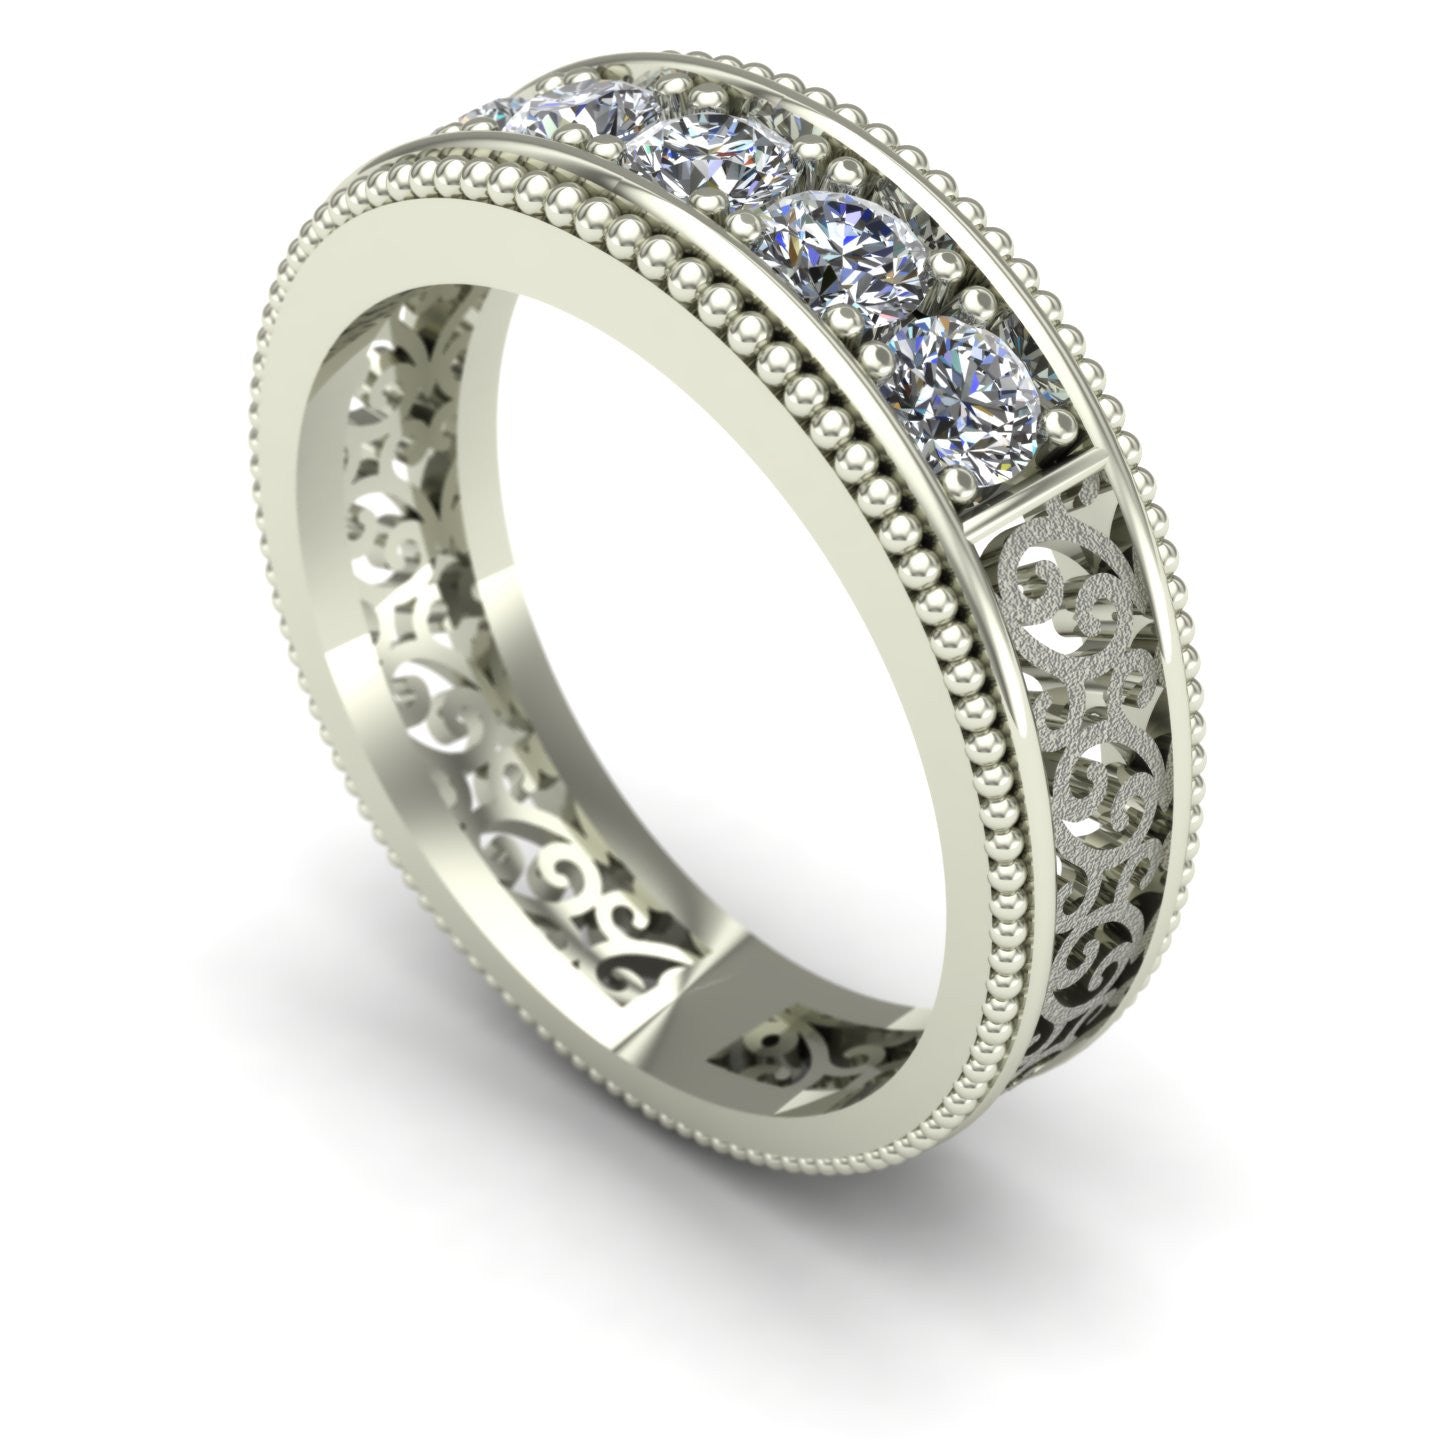 Sandblasted Scroll Filigree one carat Diamond Wedding Band in 14k White Gold - Charles Babb Designs